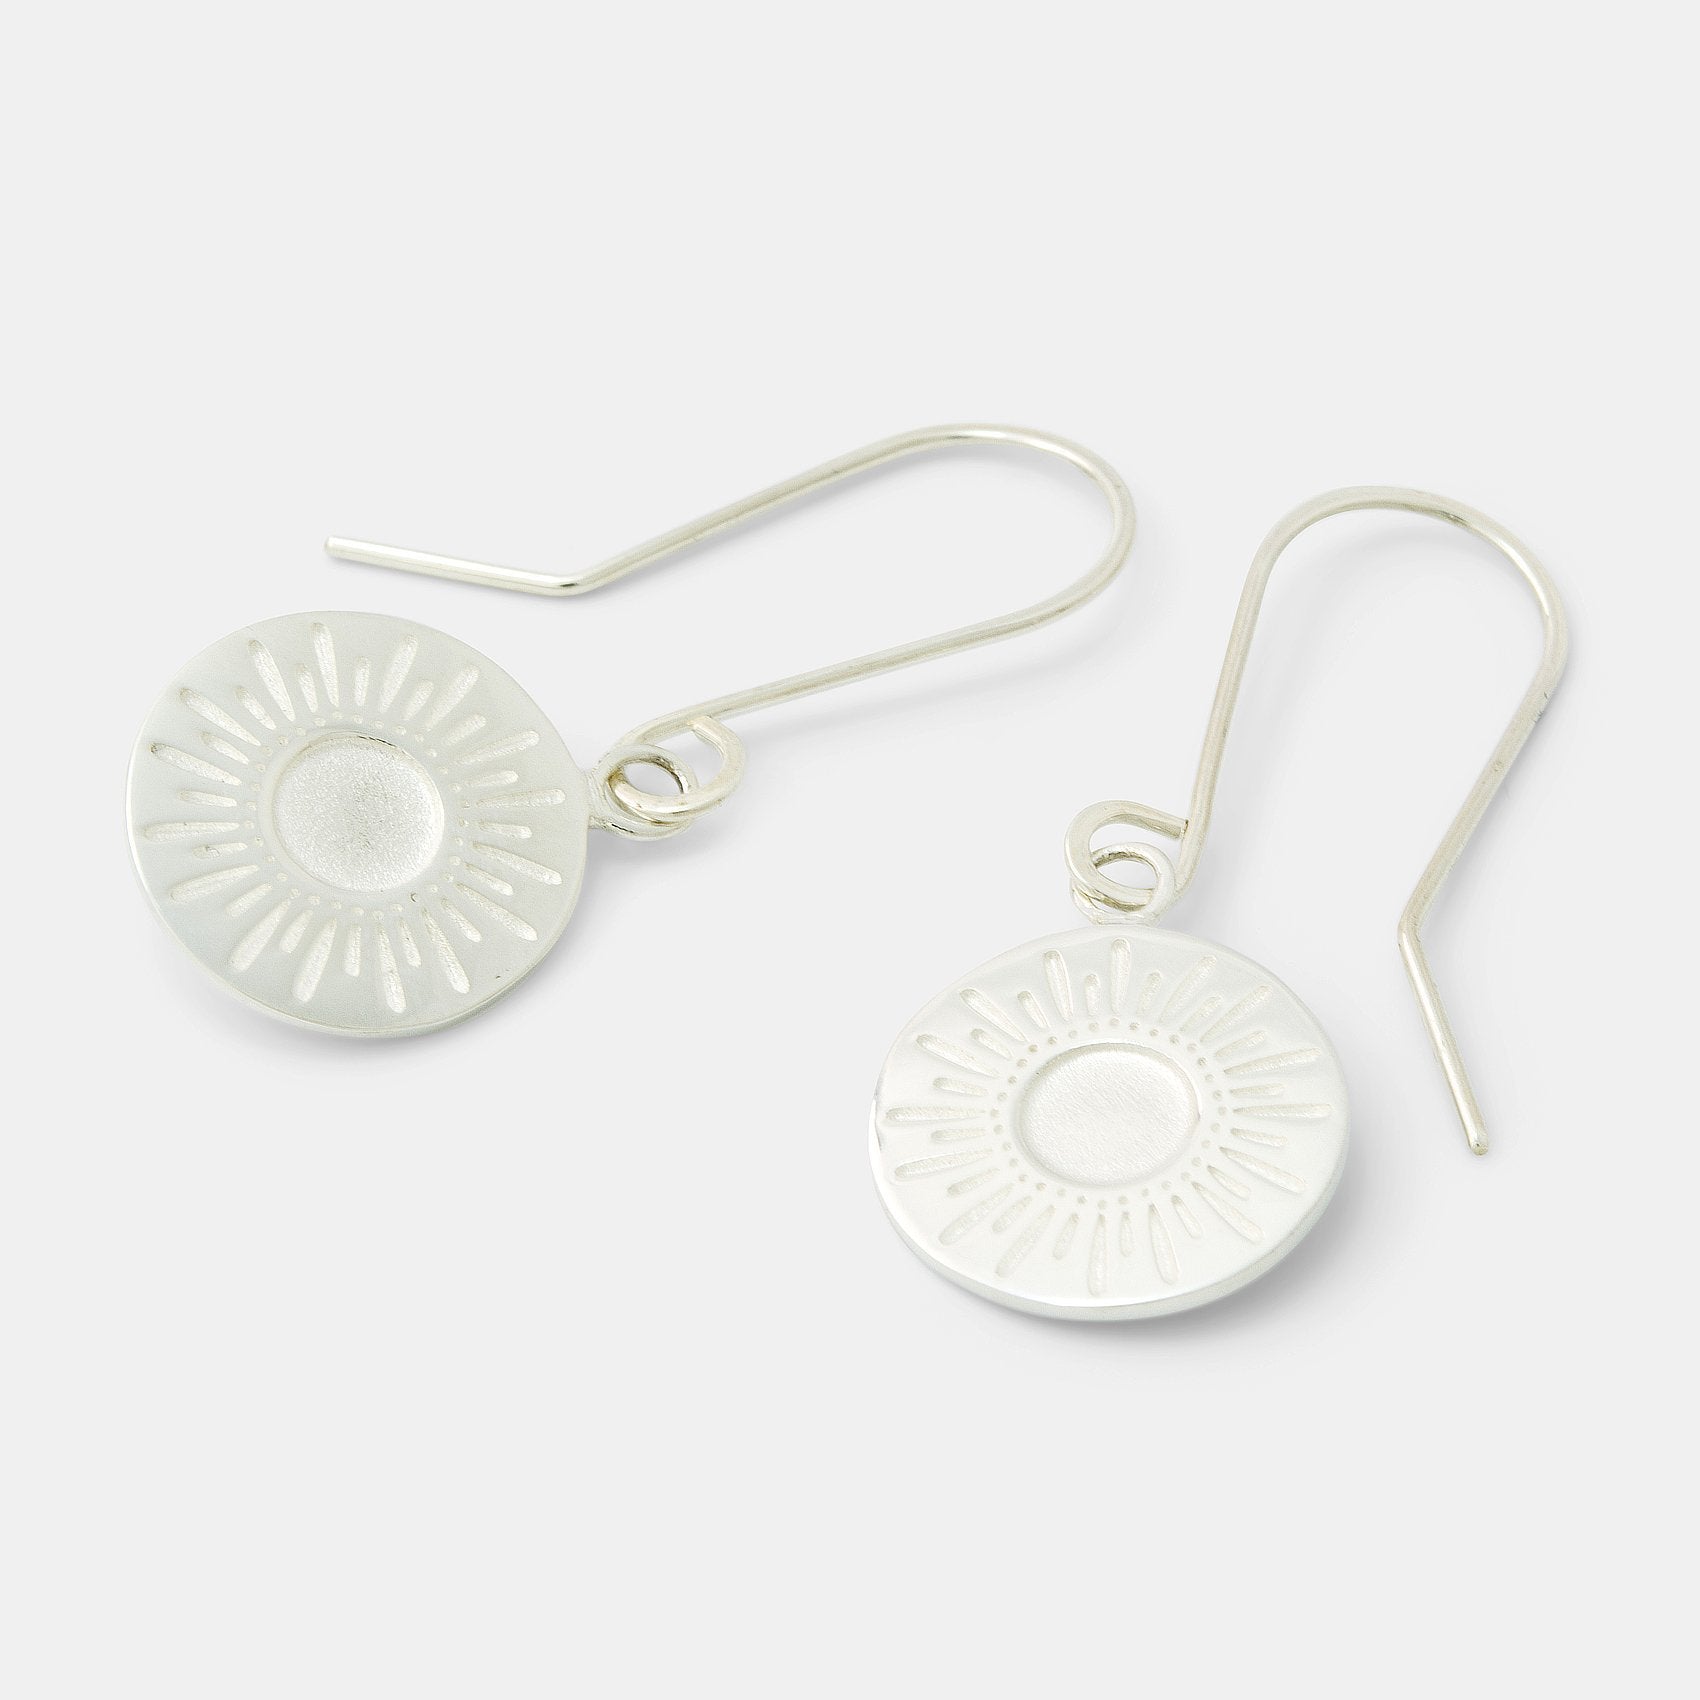 Sunburst amulet earrings - Simone Walsh Jewellery Australia